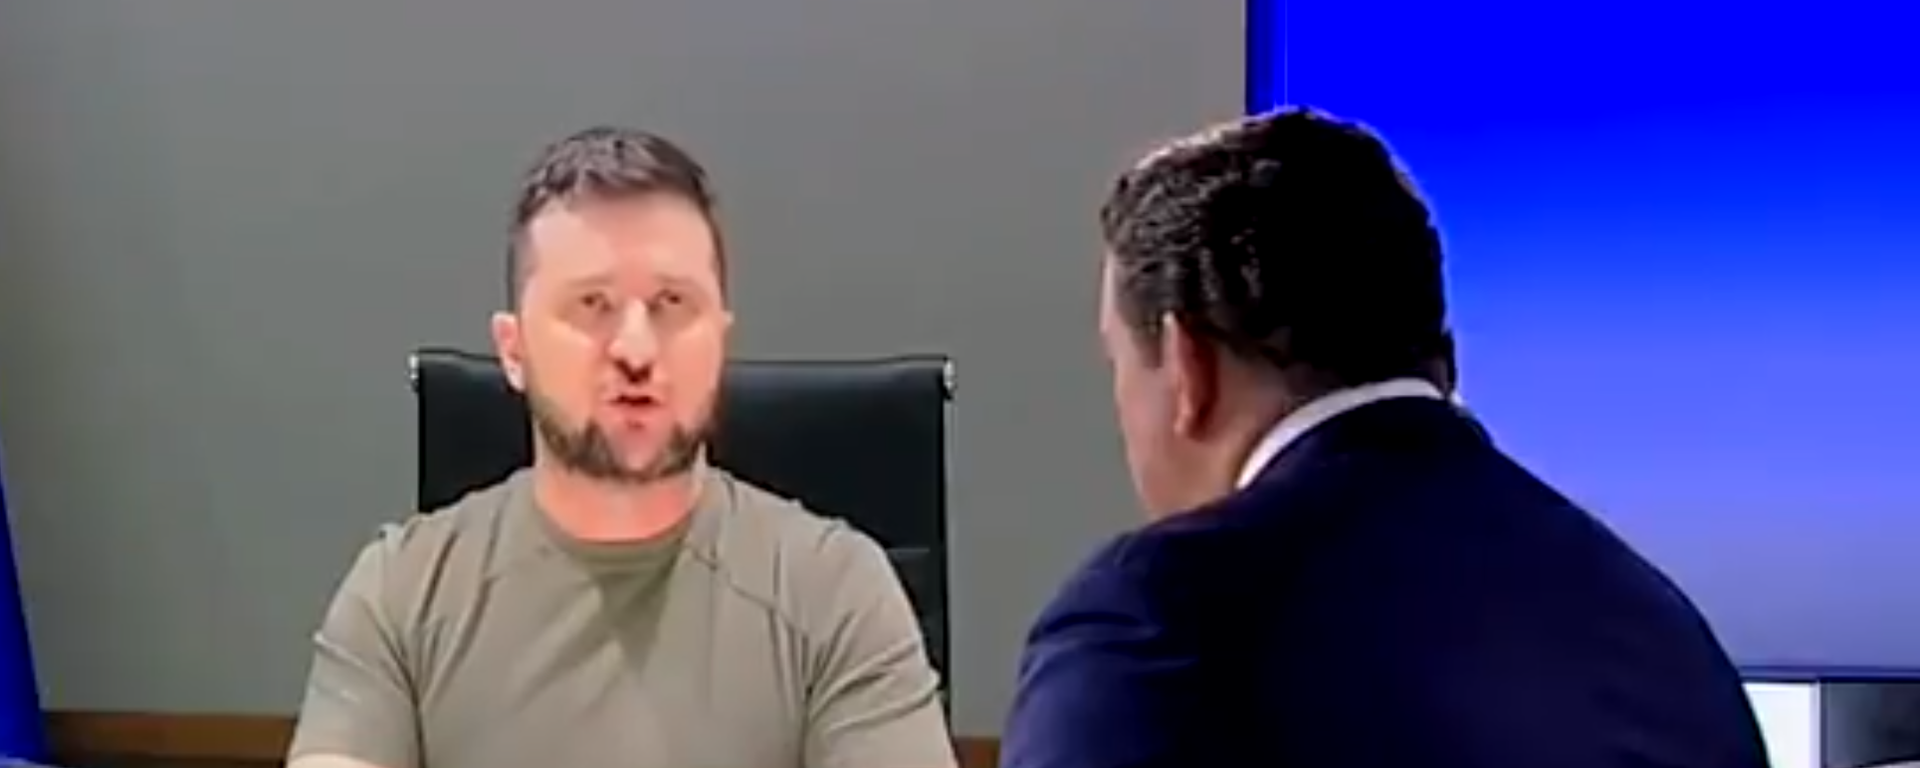 Ukrainian President Volodymyr Zelensky speaks with Fox News reporter Bret Baier in an April 1, 2022, interview - Sputnik International, 1920, 04.04.2022